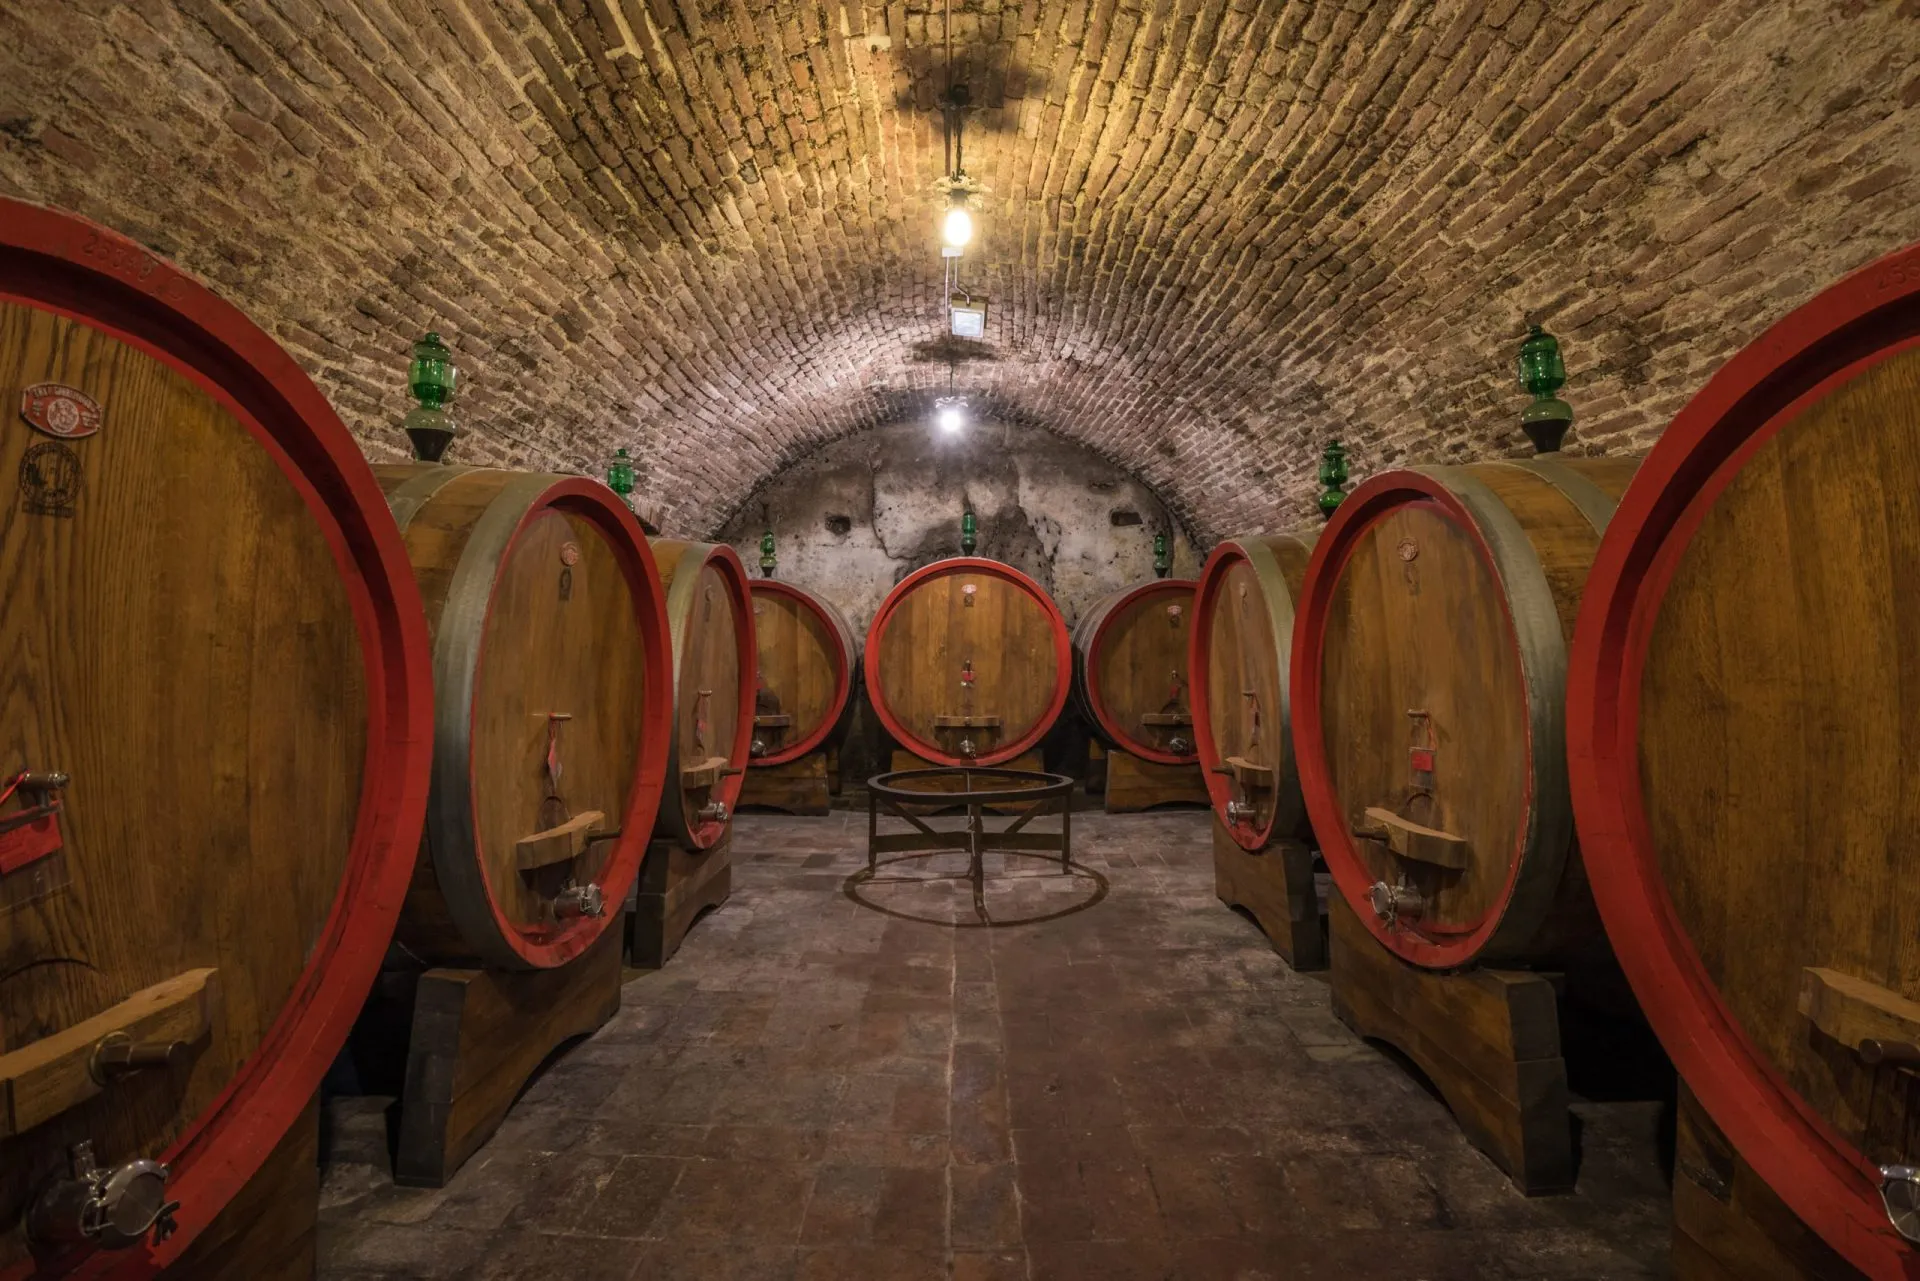 Wine barrels (botti) in a Montepulciano cellar, Tuscany